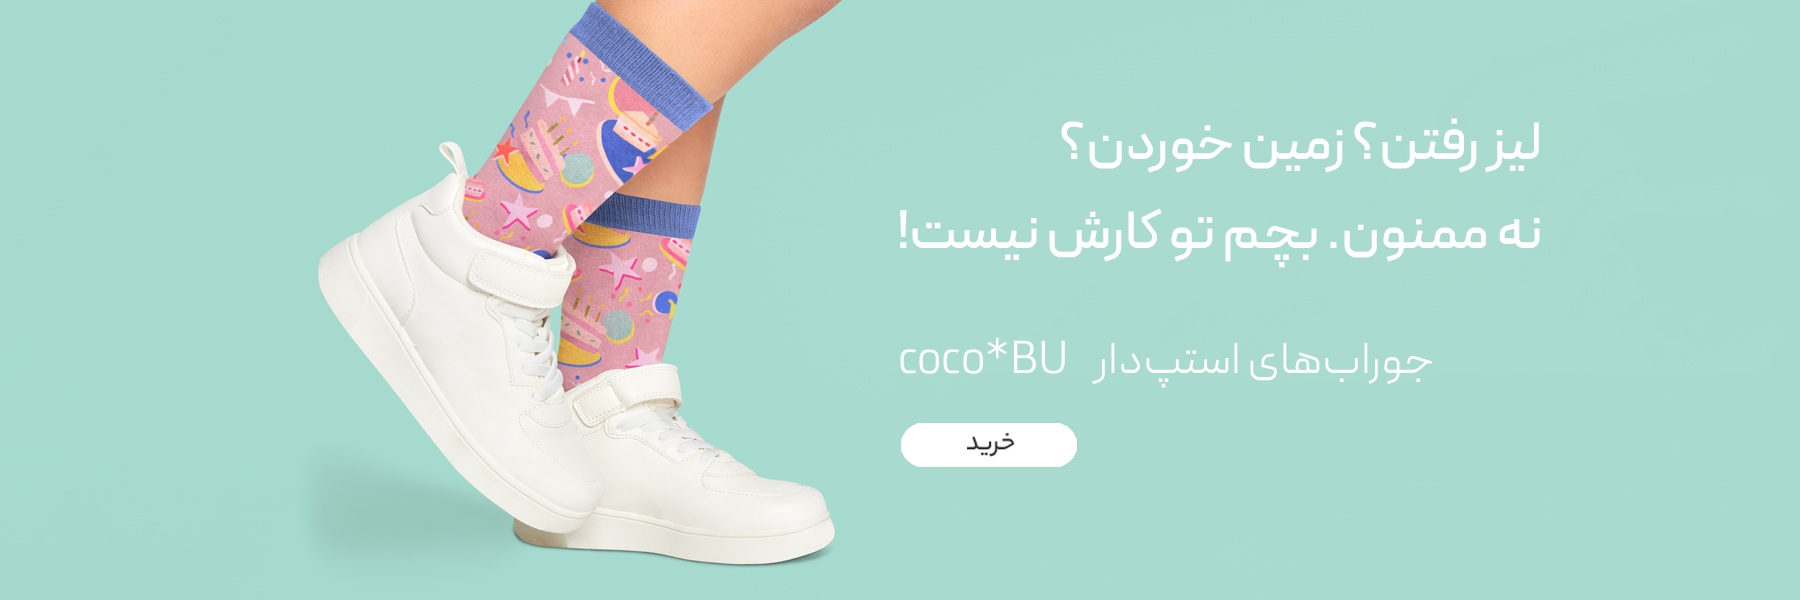 niniasur coco BU socks banner